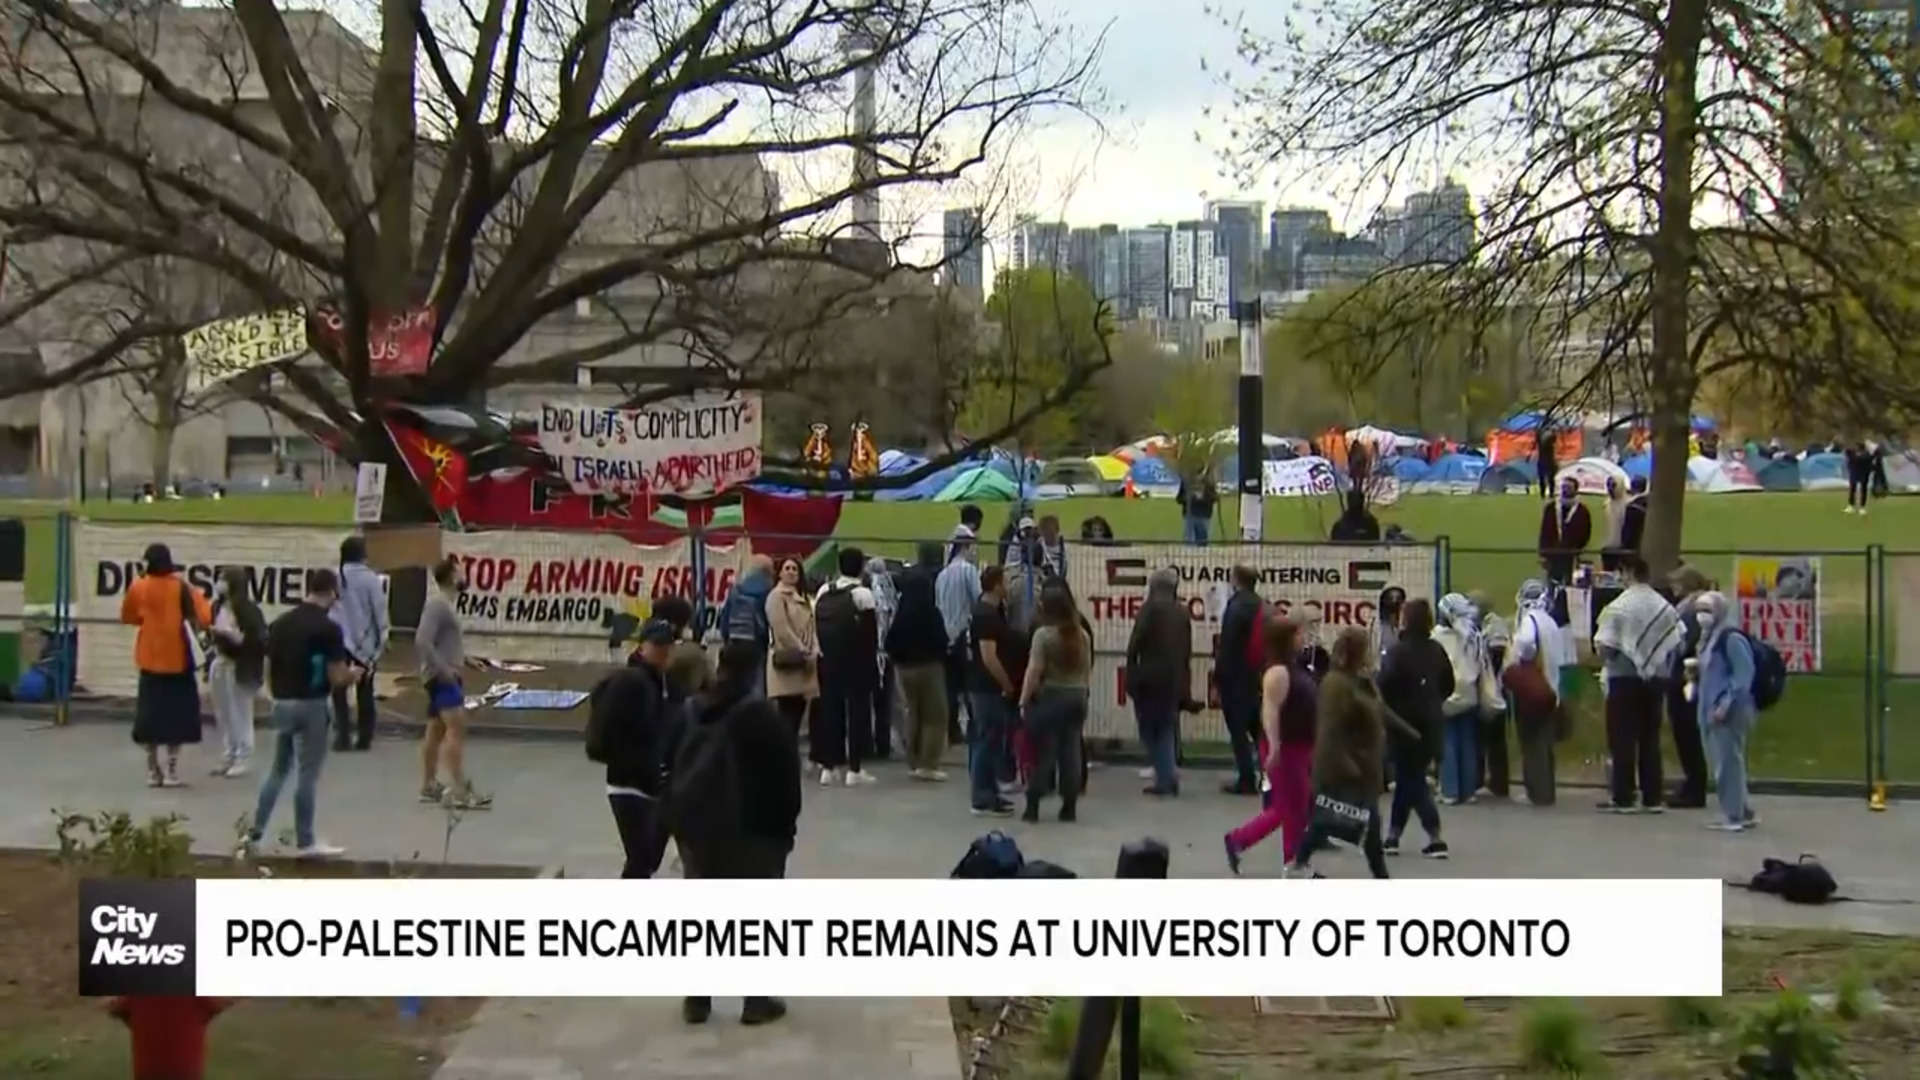 Pro-Palestinian encampment remains at University of Toronto